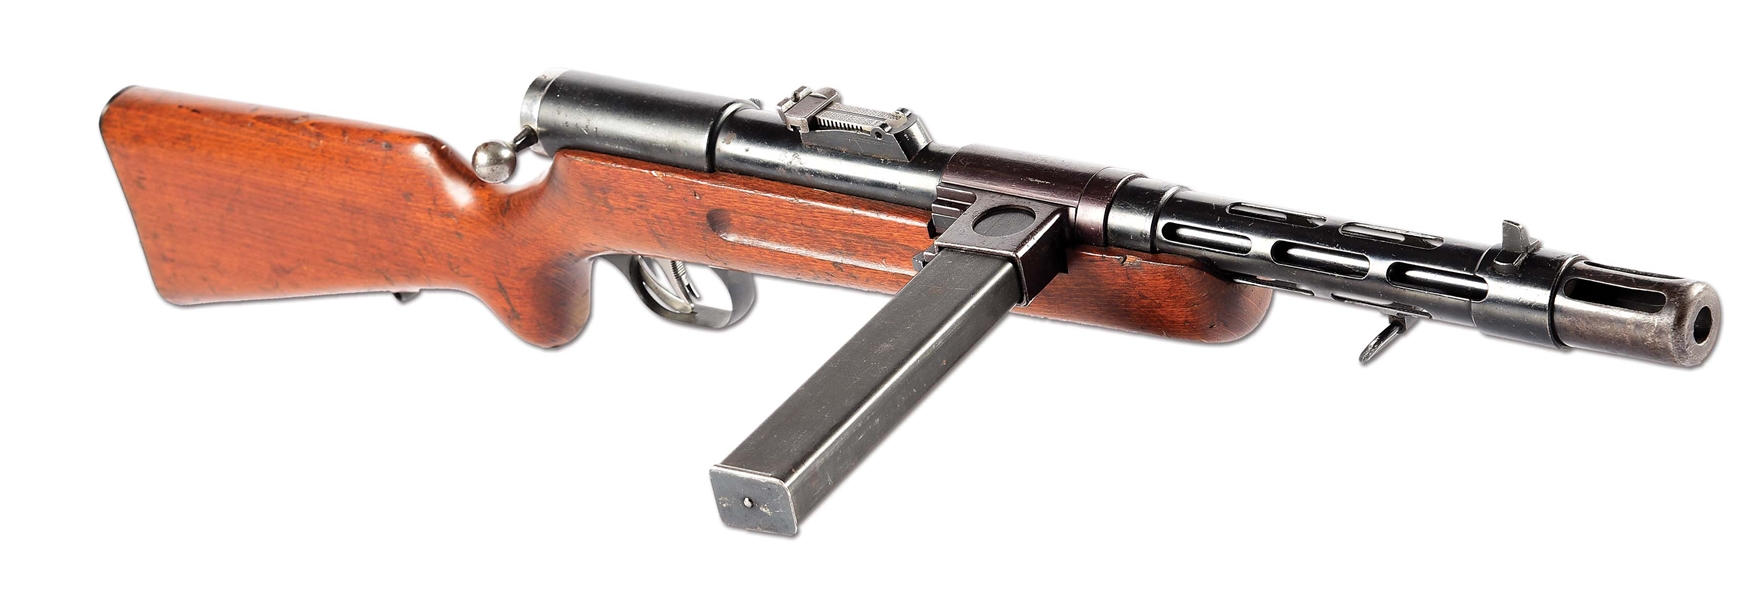 (N) RARE EARLY GERMAN CONTRACT BERGMANN MP-34 (PREDECESSOR TO 35/I) MACHINE GUN (CURIO AND RELIC).